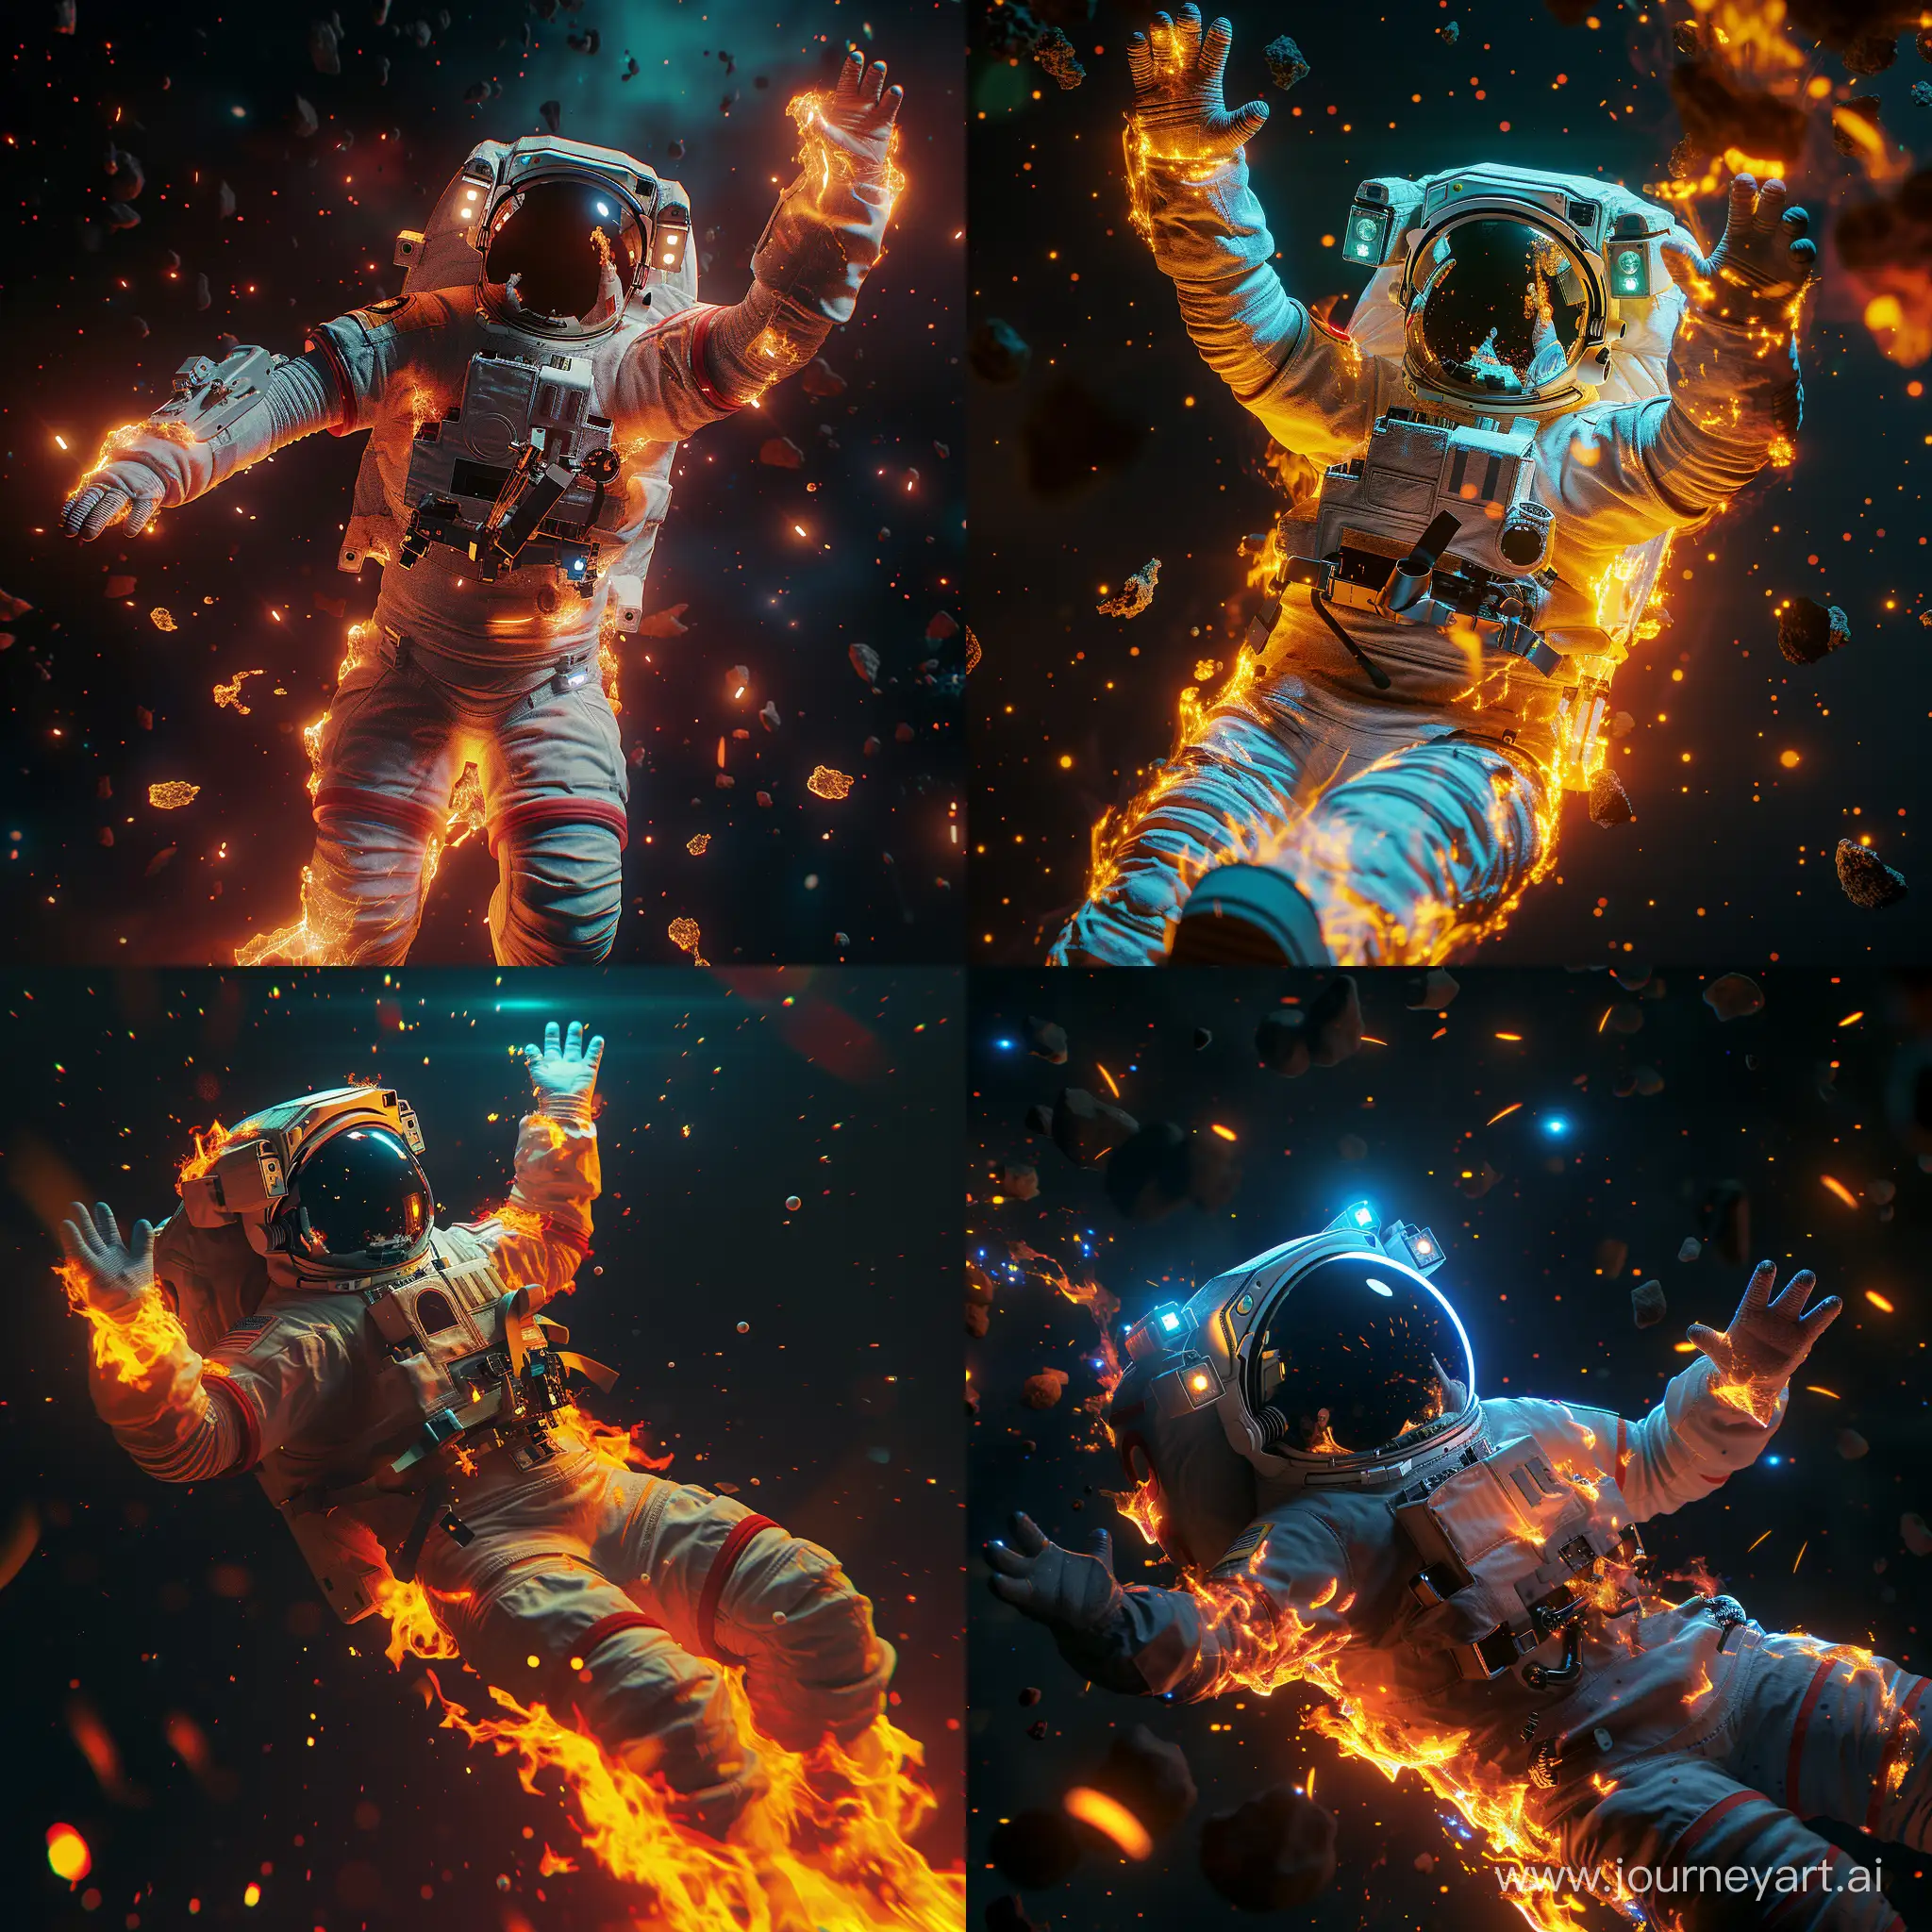 Astronaut-in-Modern-Plastic-Suit-Sinking-in-Fire-in-Space